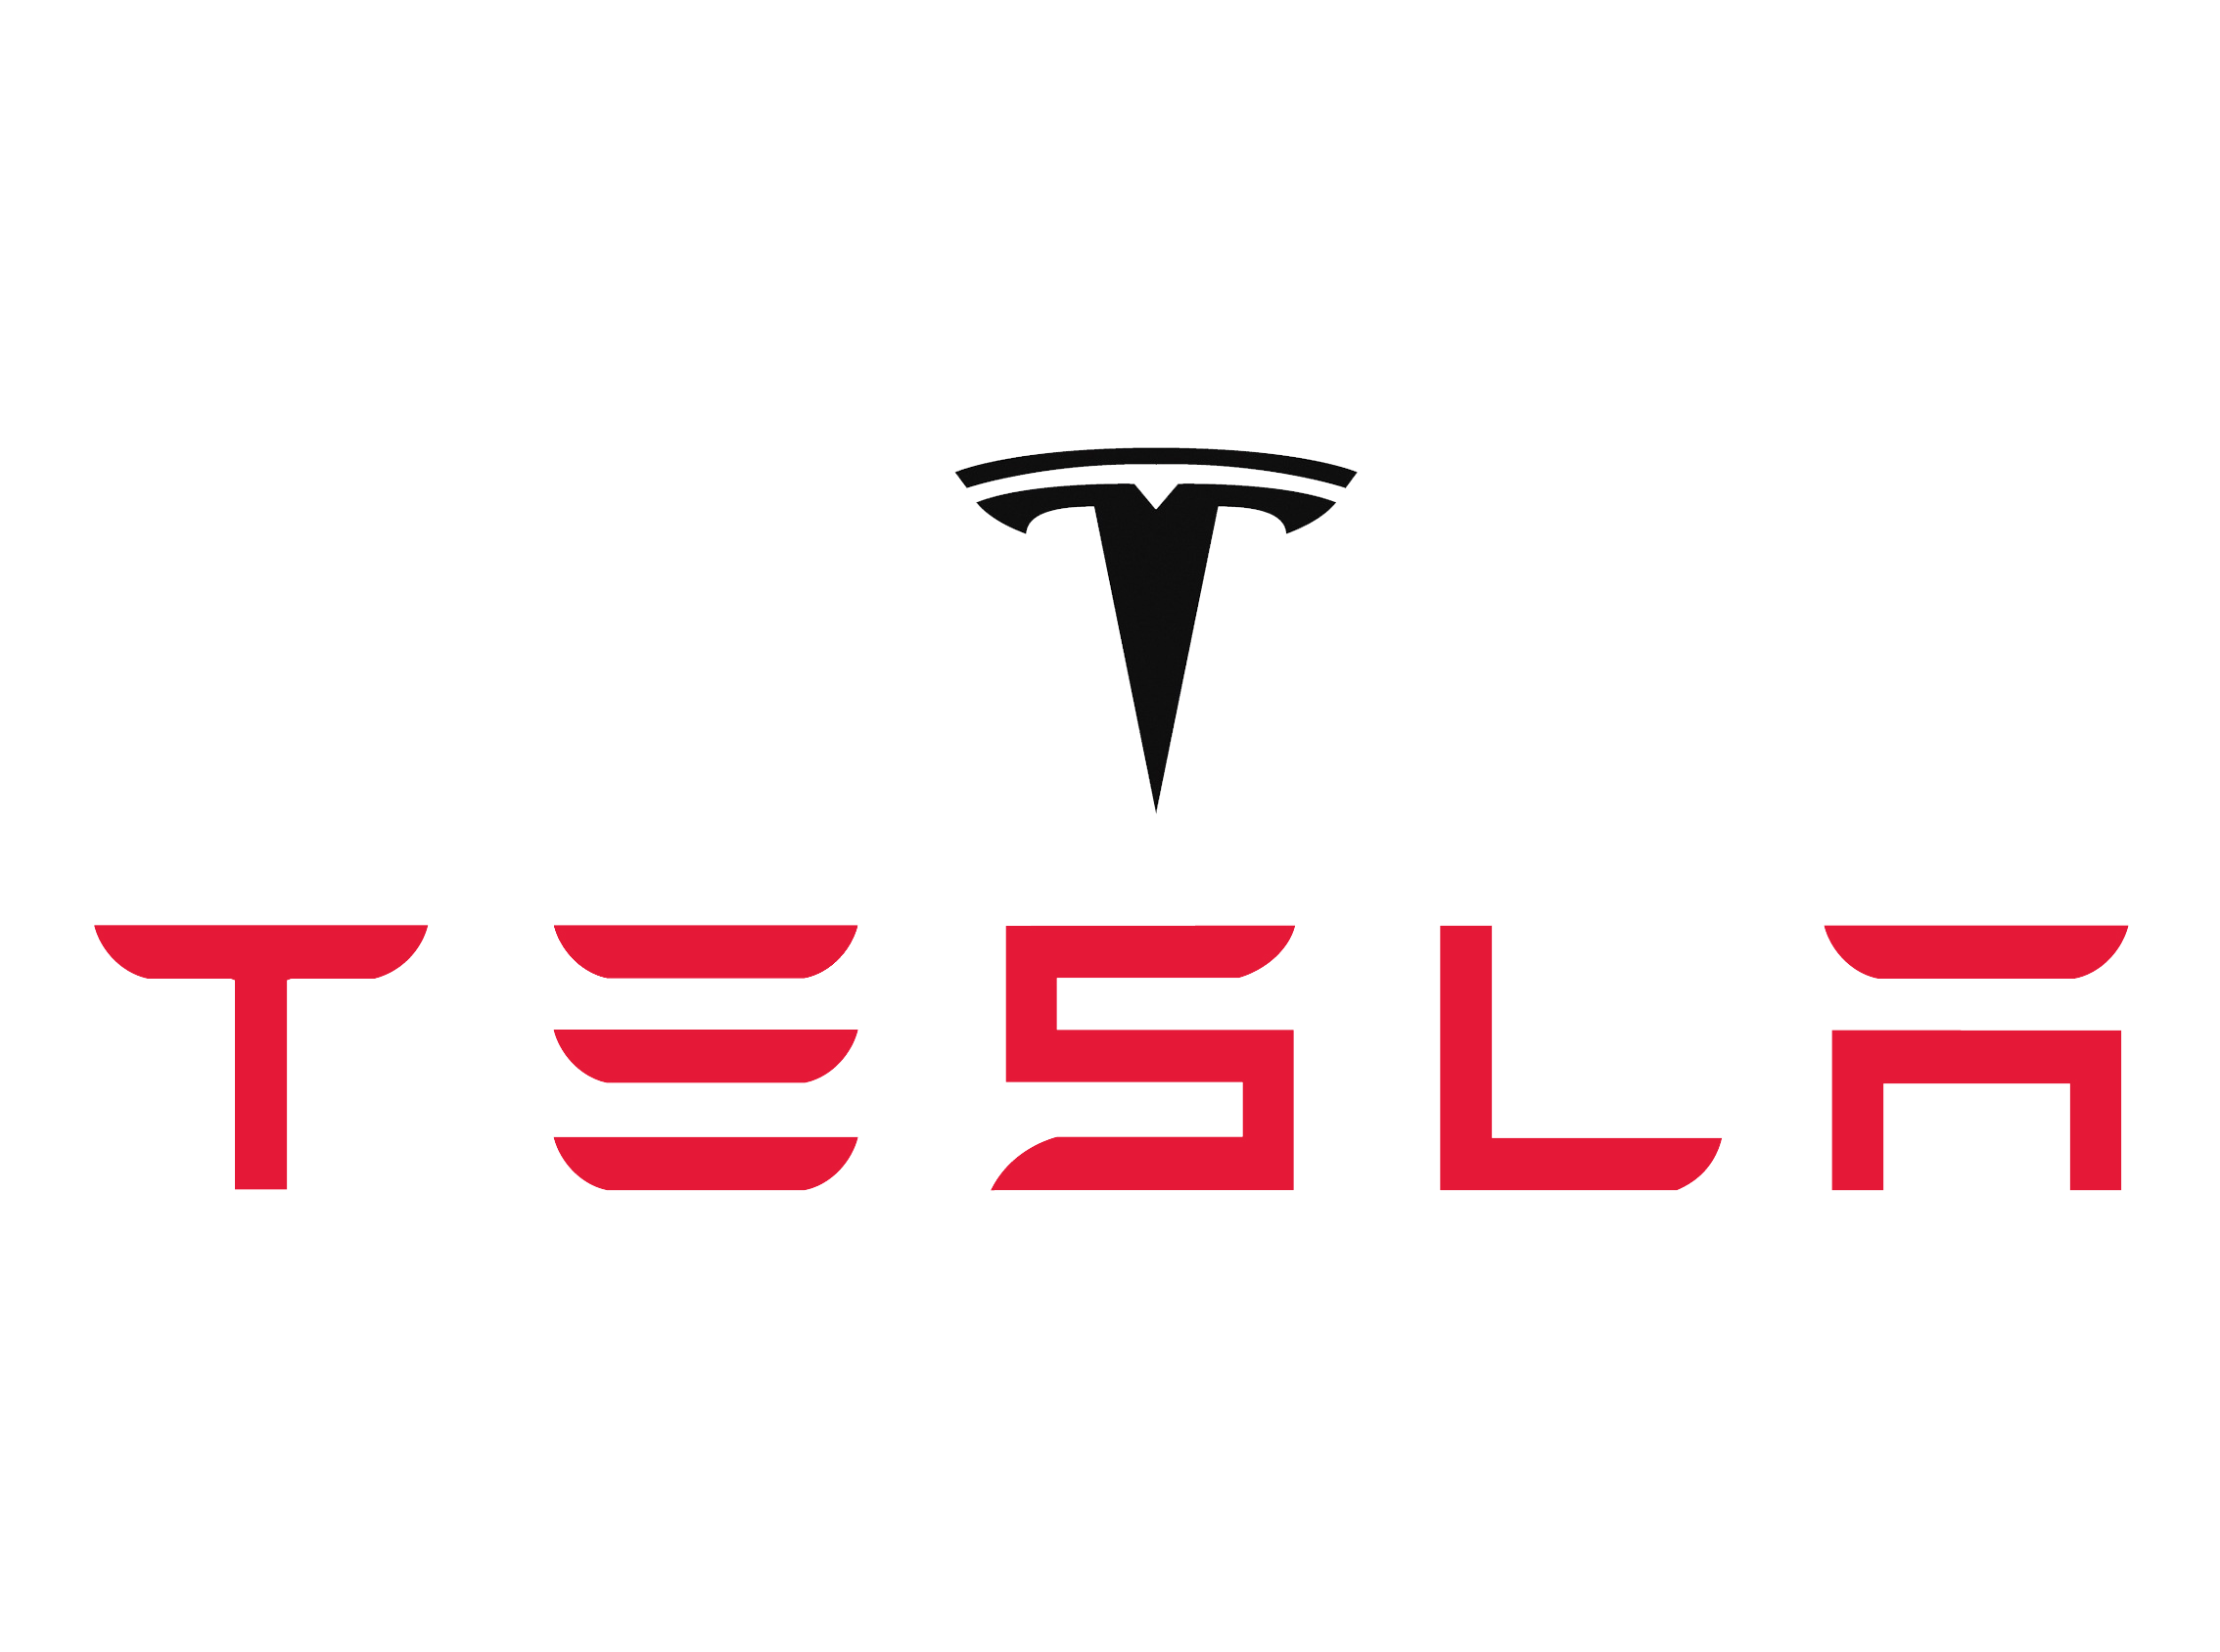 Tesla restarts India market talks with new factory proposal  Reuters